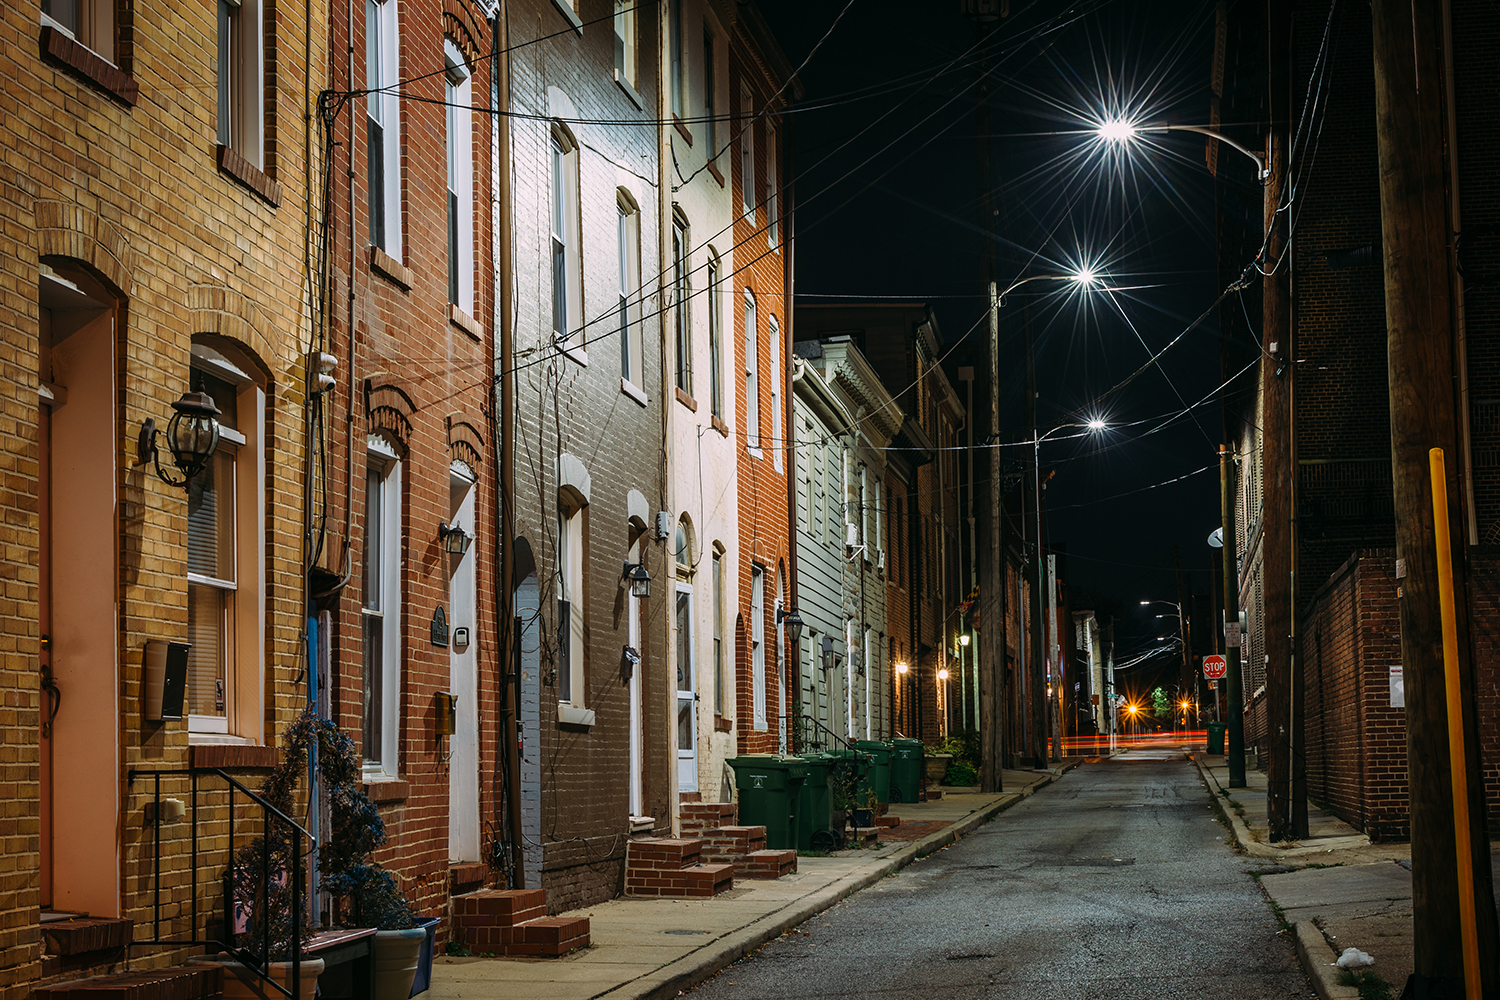 Neighborhood at night with streetlights